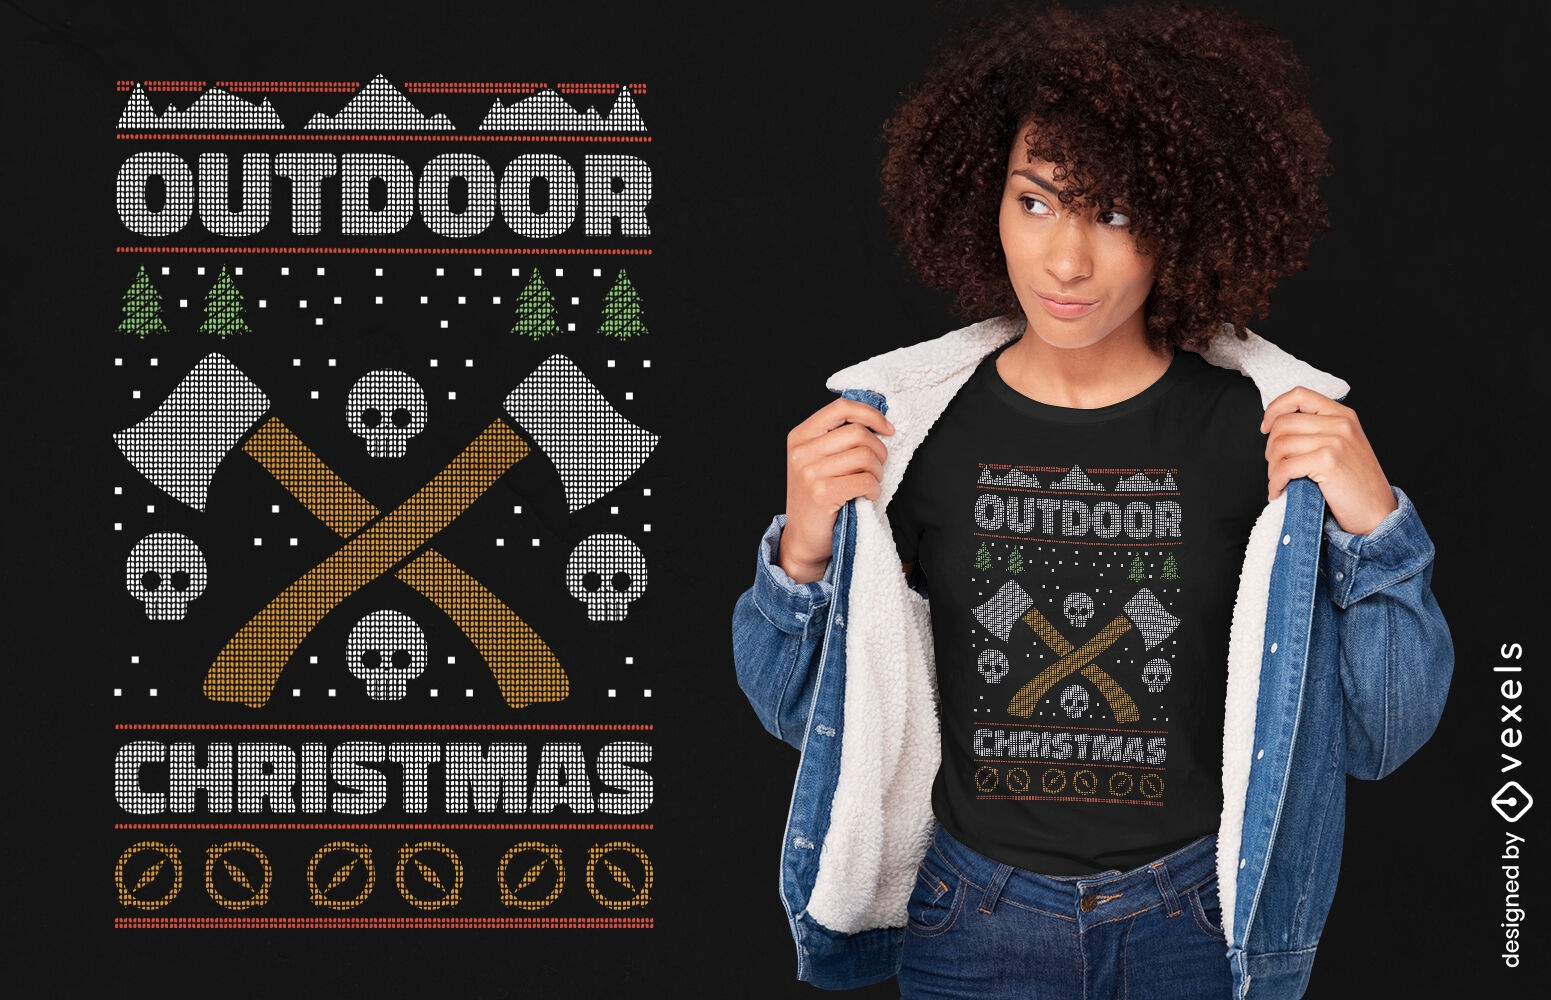 Outdoor christmas t-shirt design